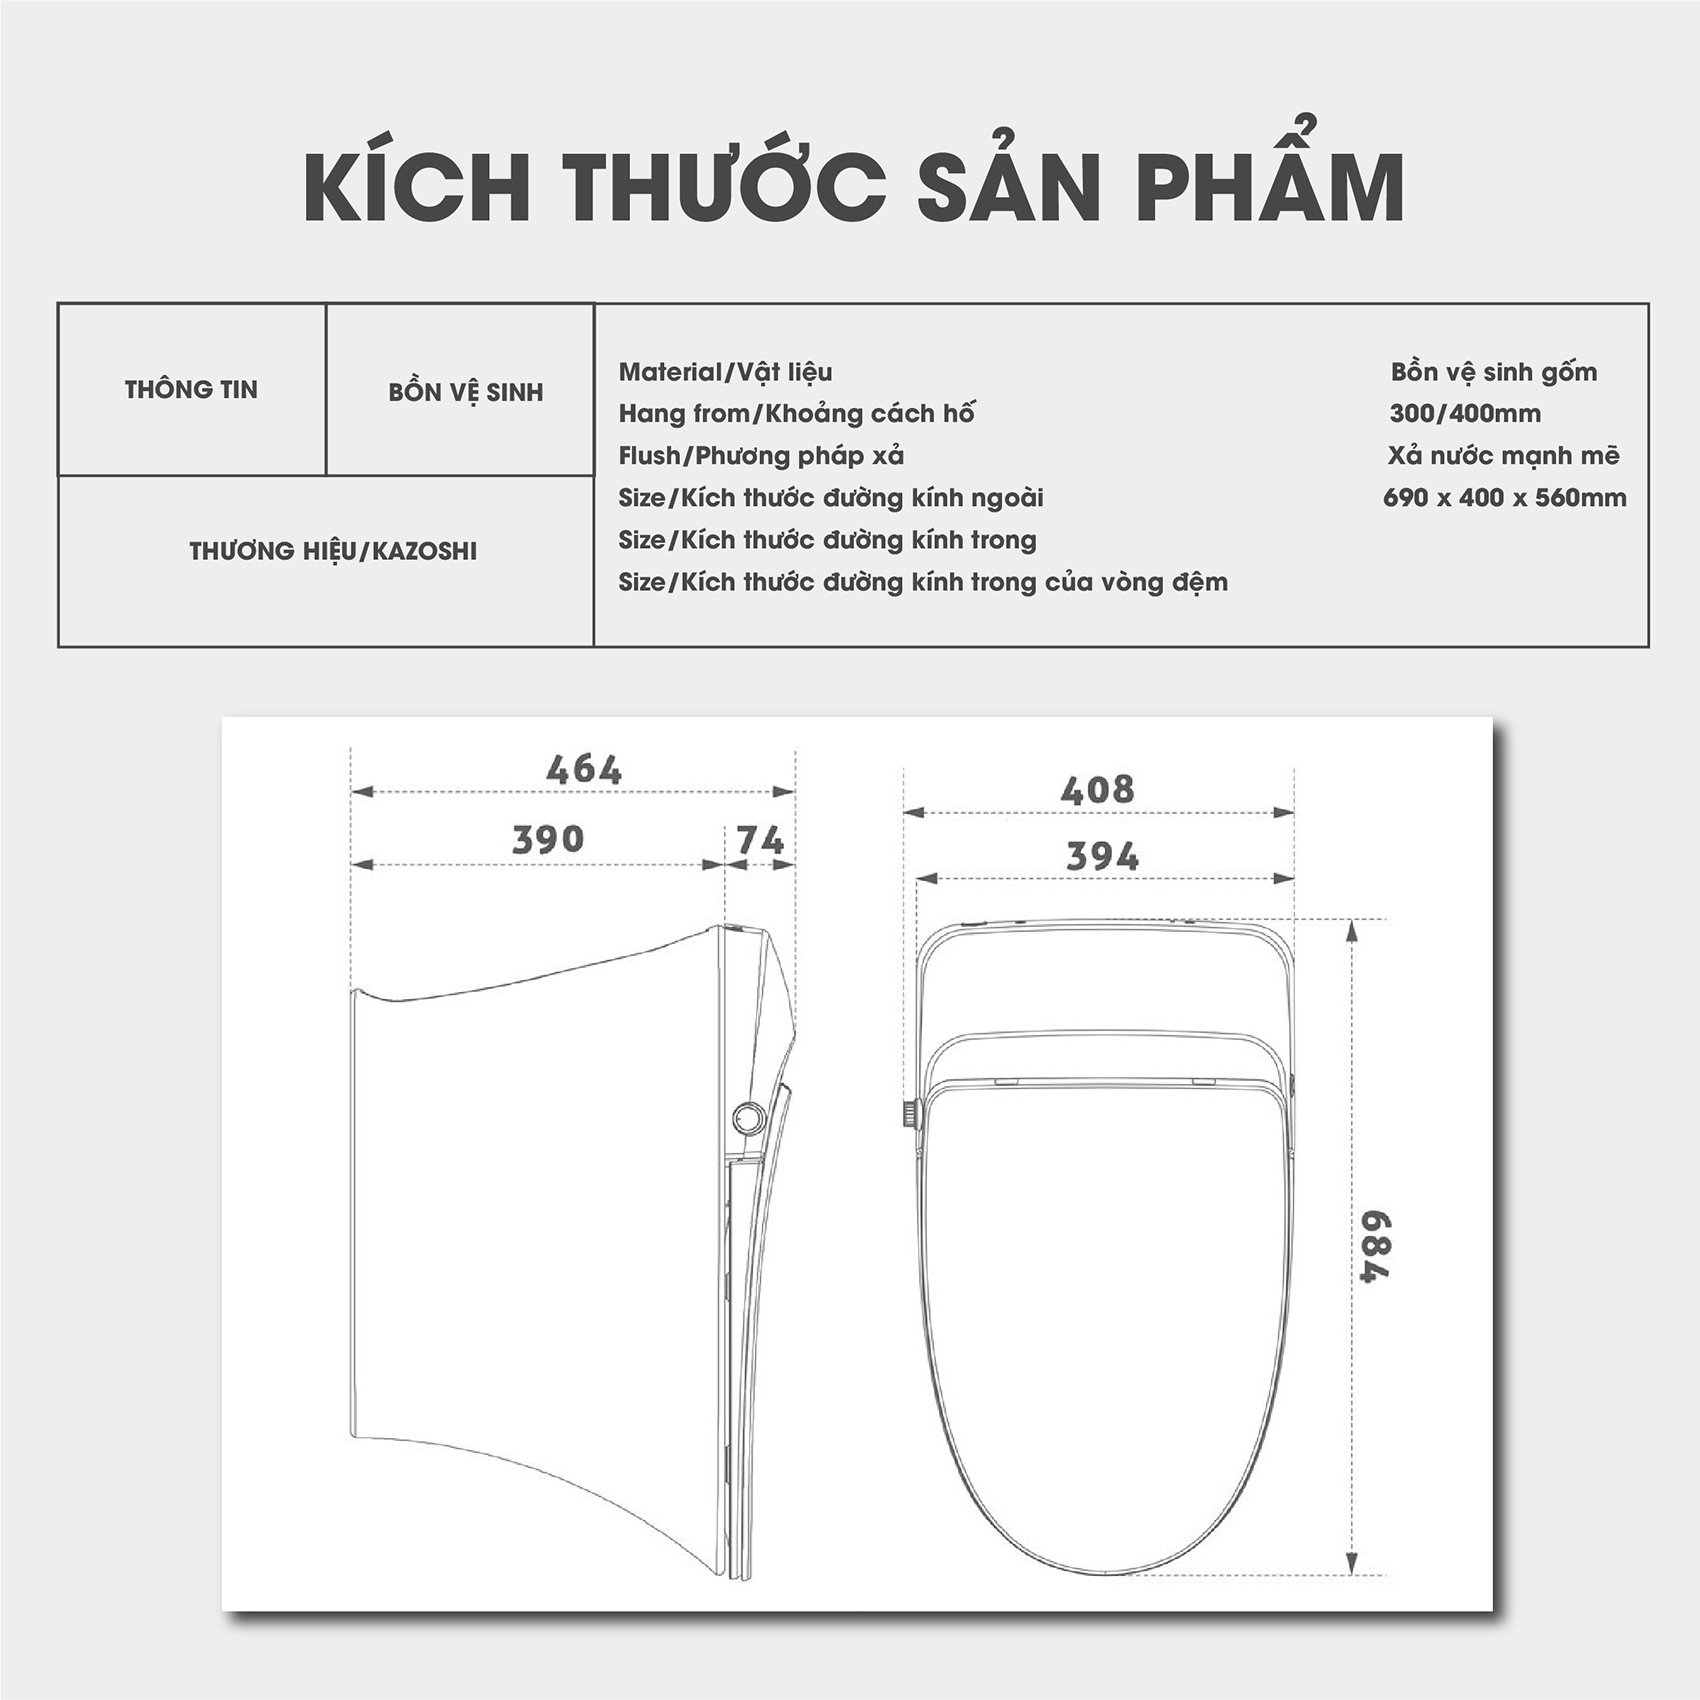 kich thuoc san pham 1